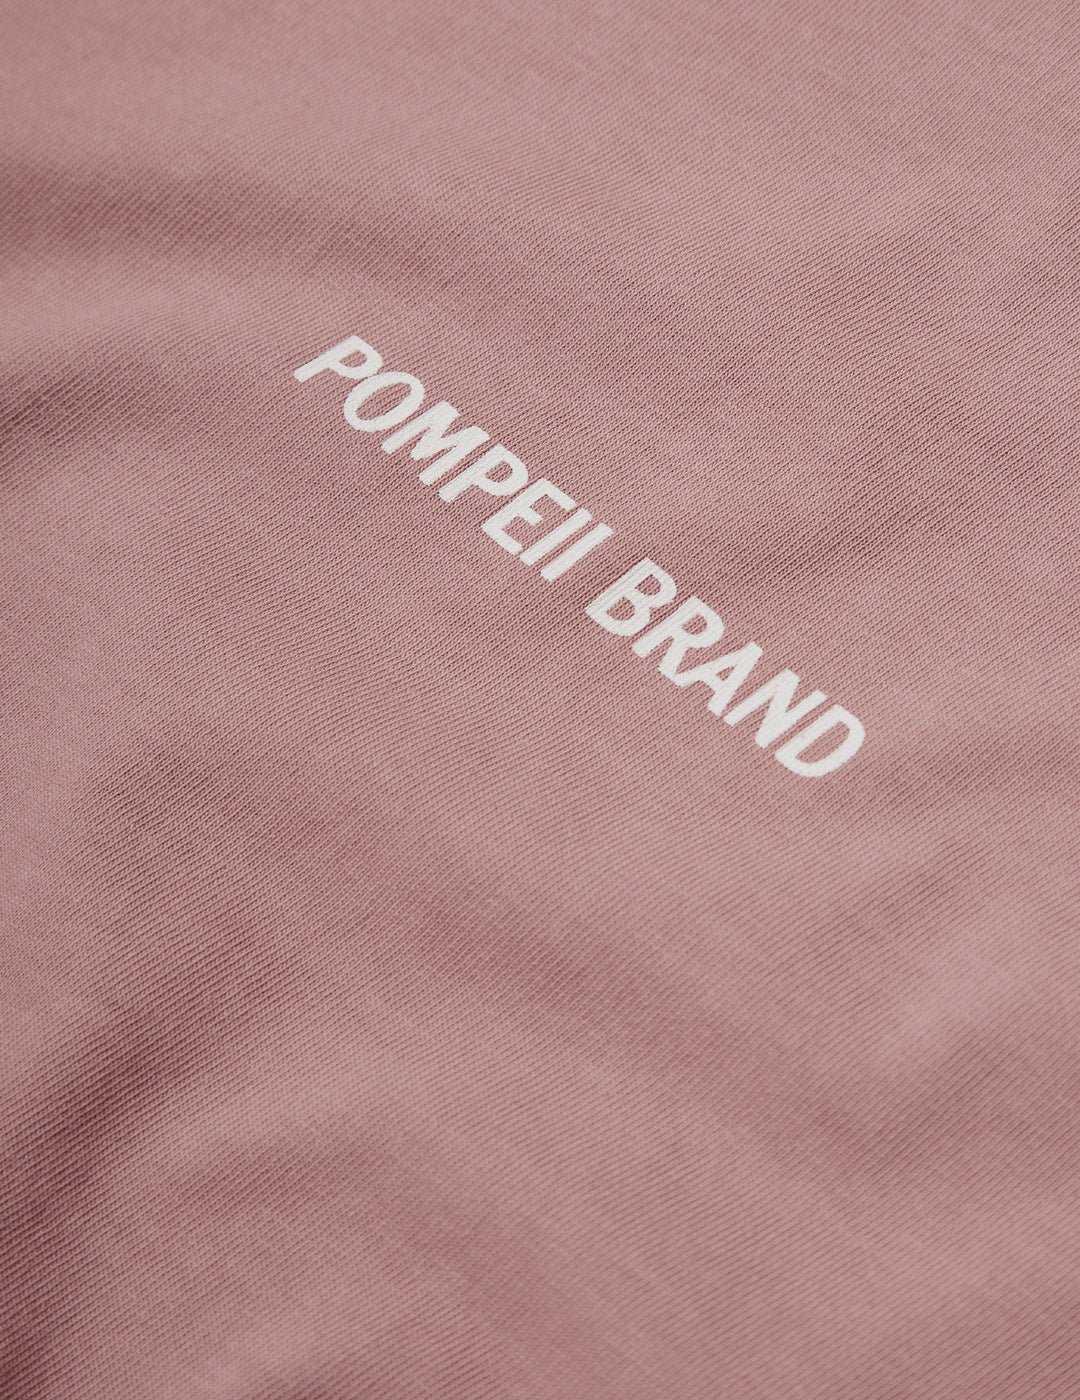 Camiseta Pomoeii Logo Dark Pink Tee